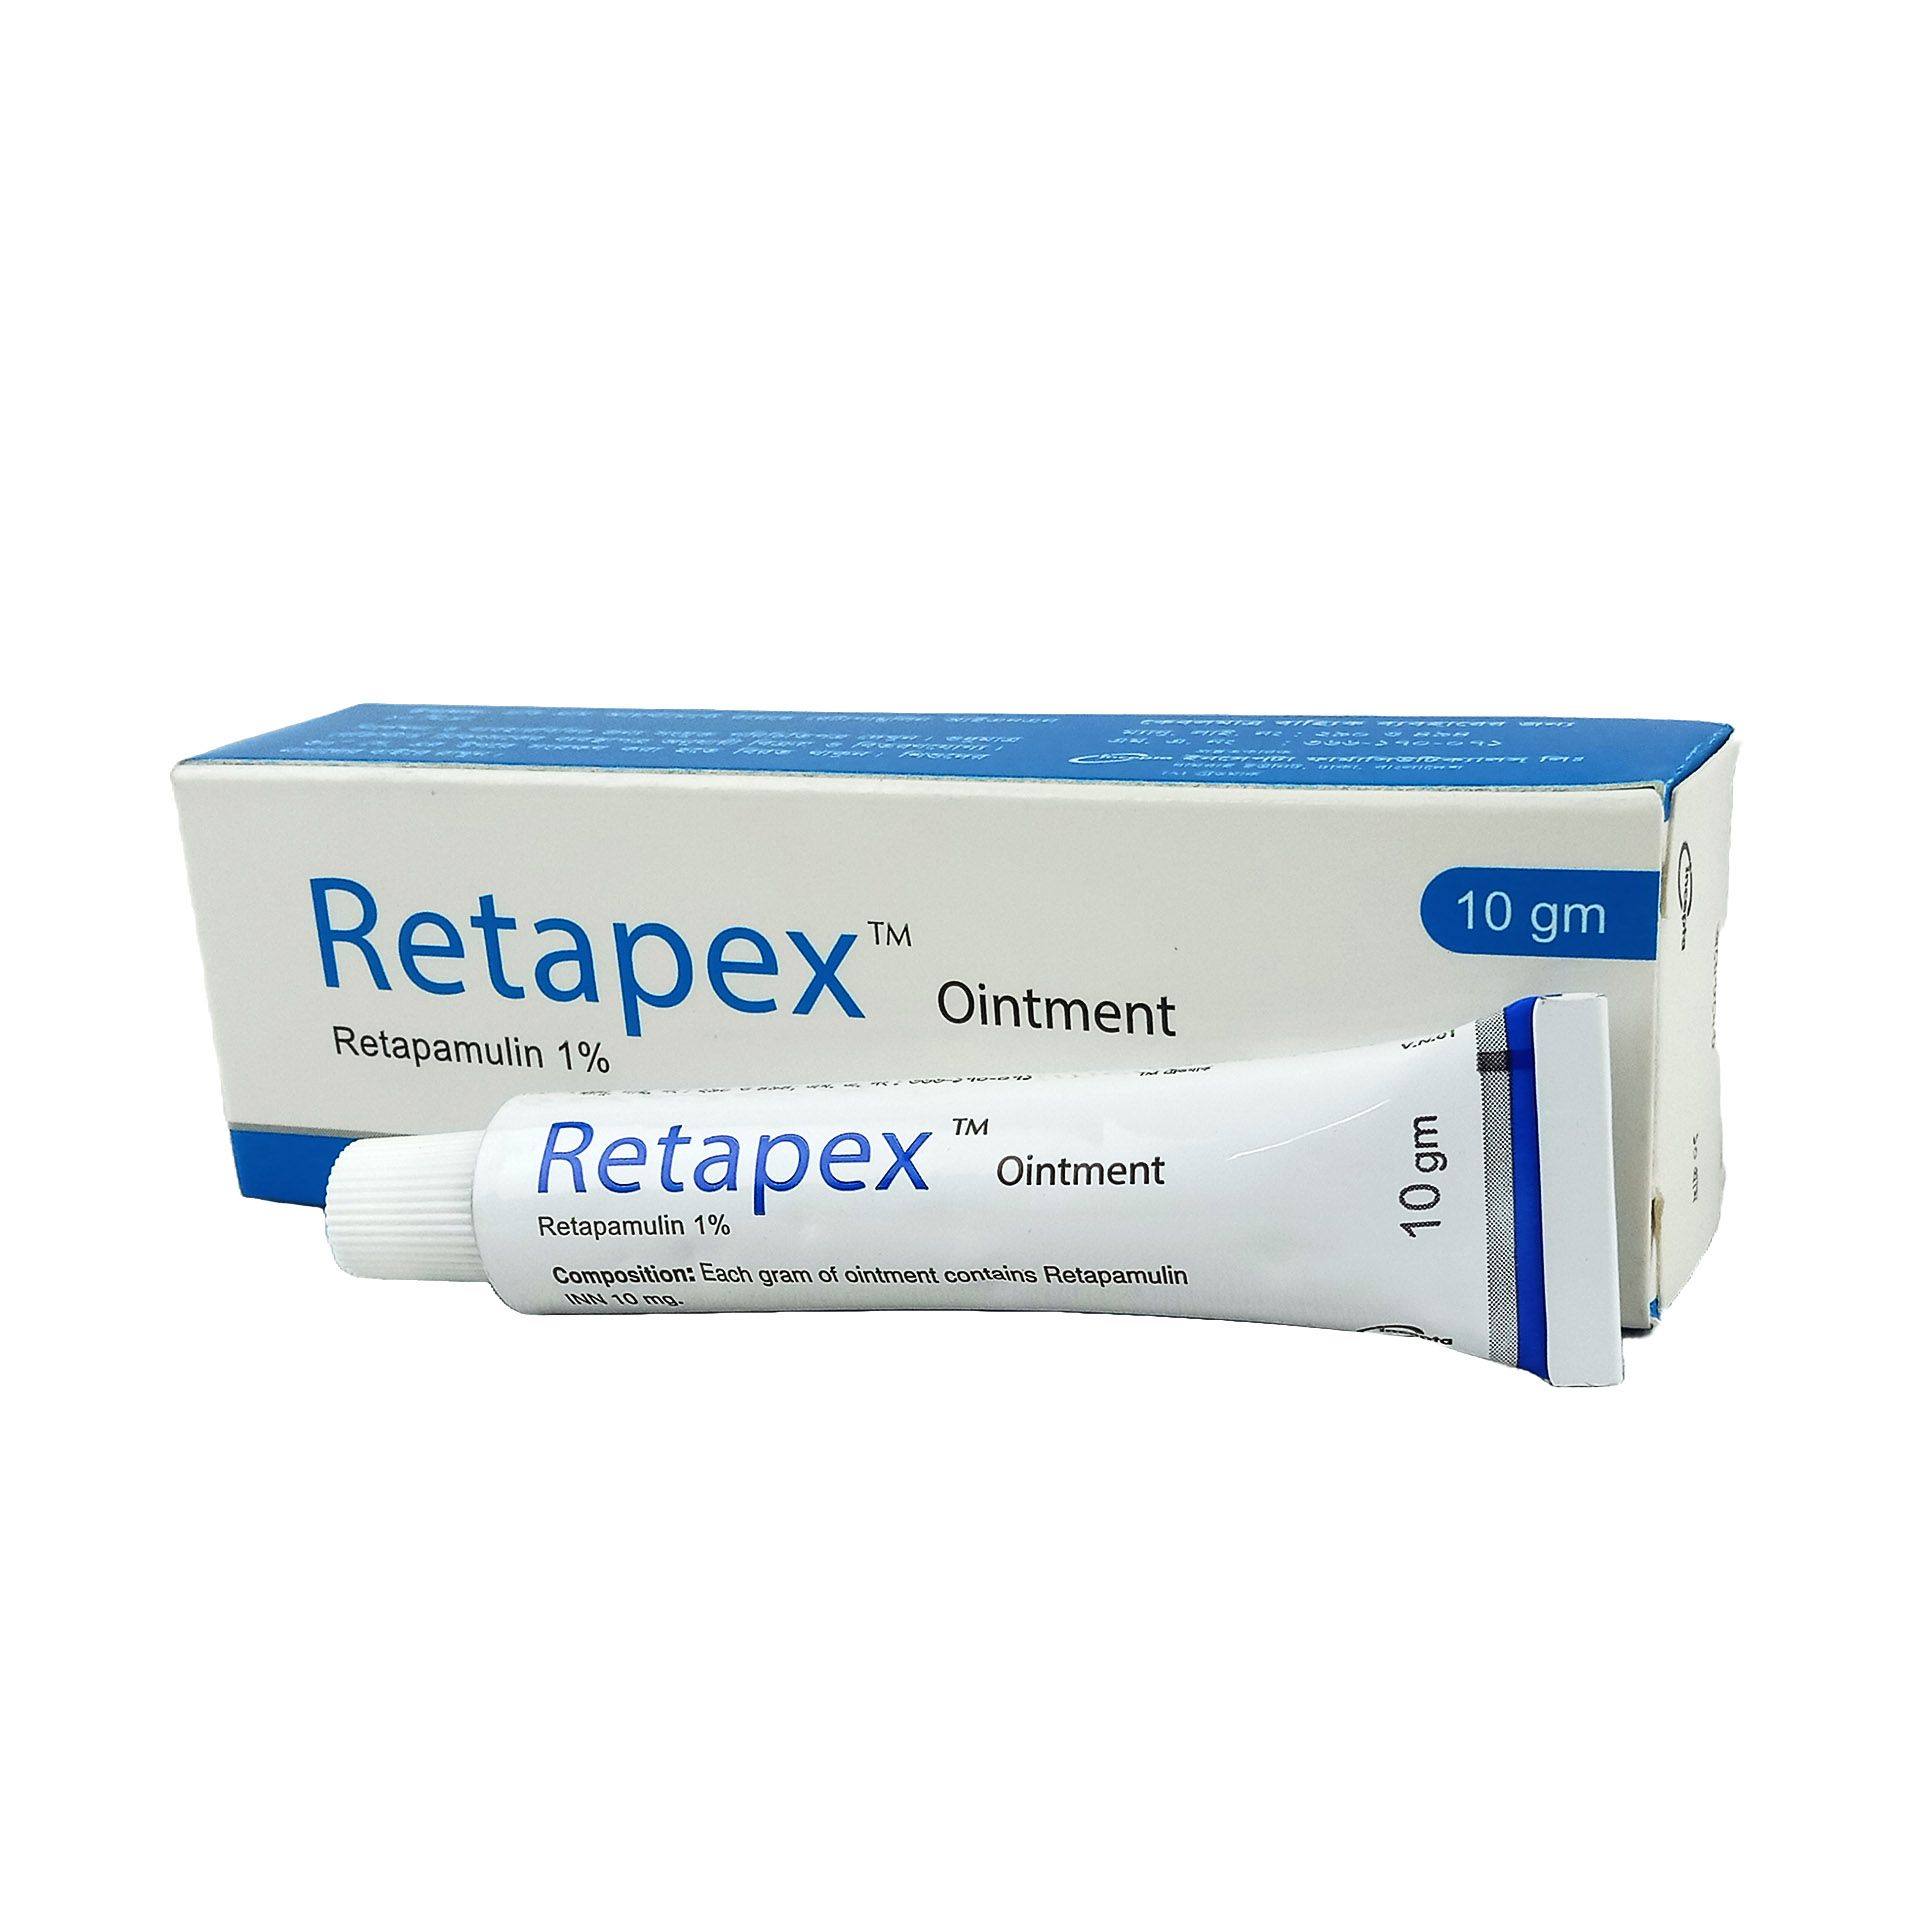 Retapex 1% Ointment